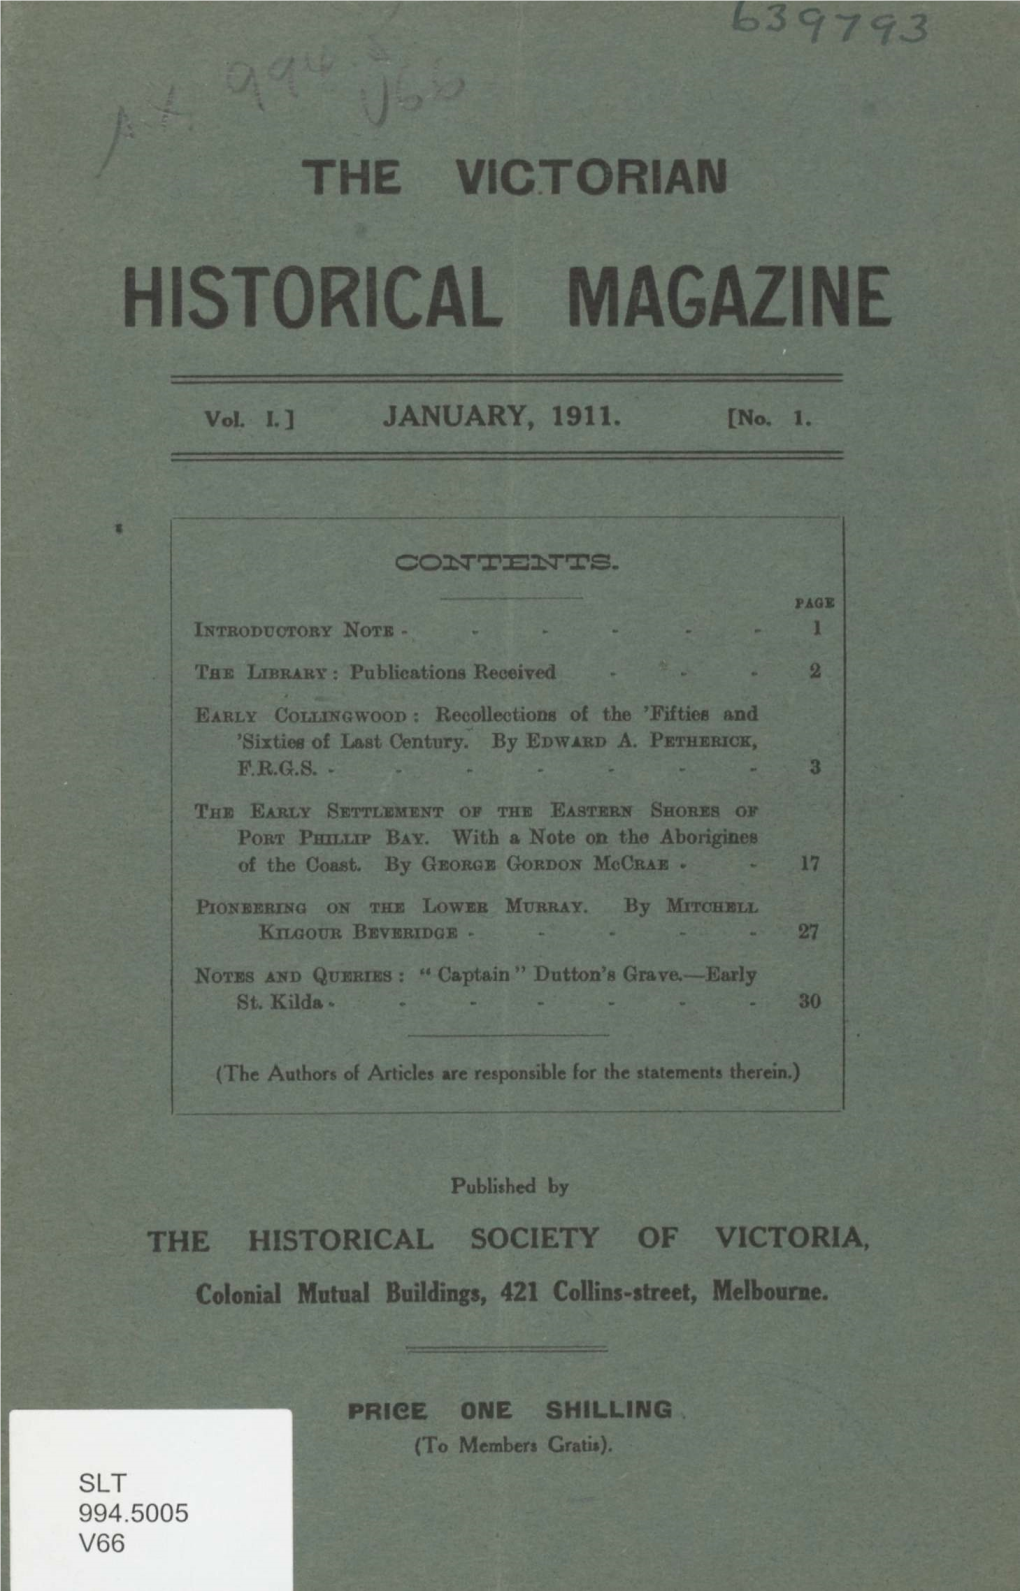 The Victorian Historical Magazine